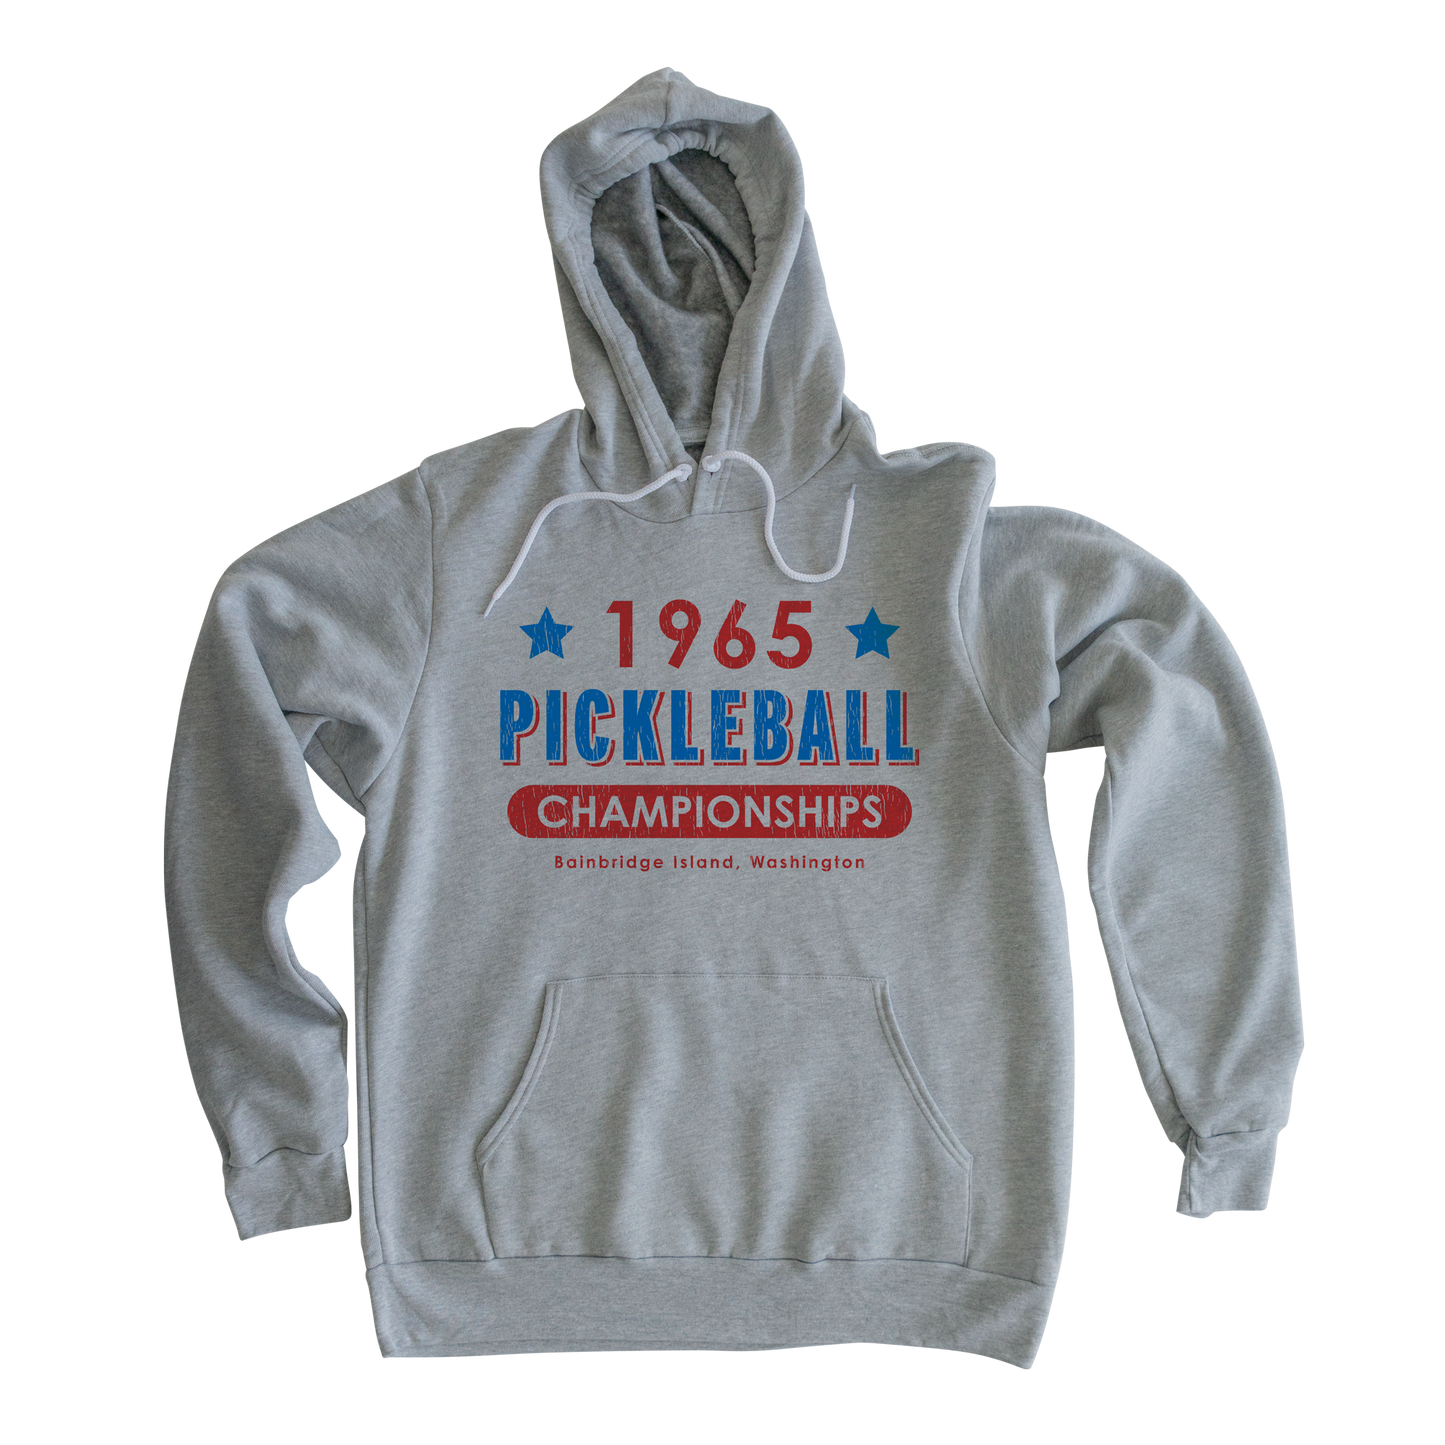 1965 Pickleball Championships Hooded Sweatshirt